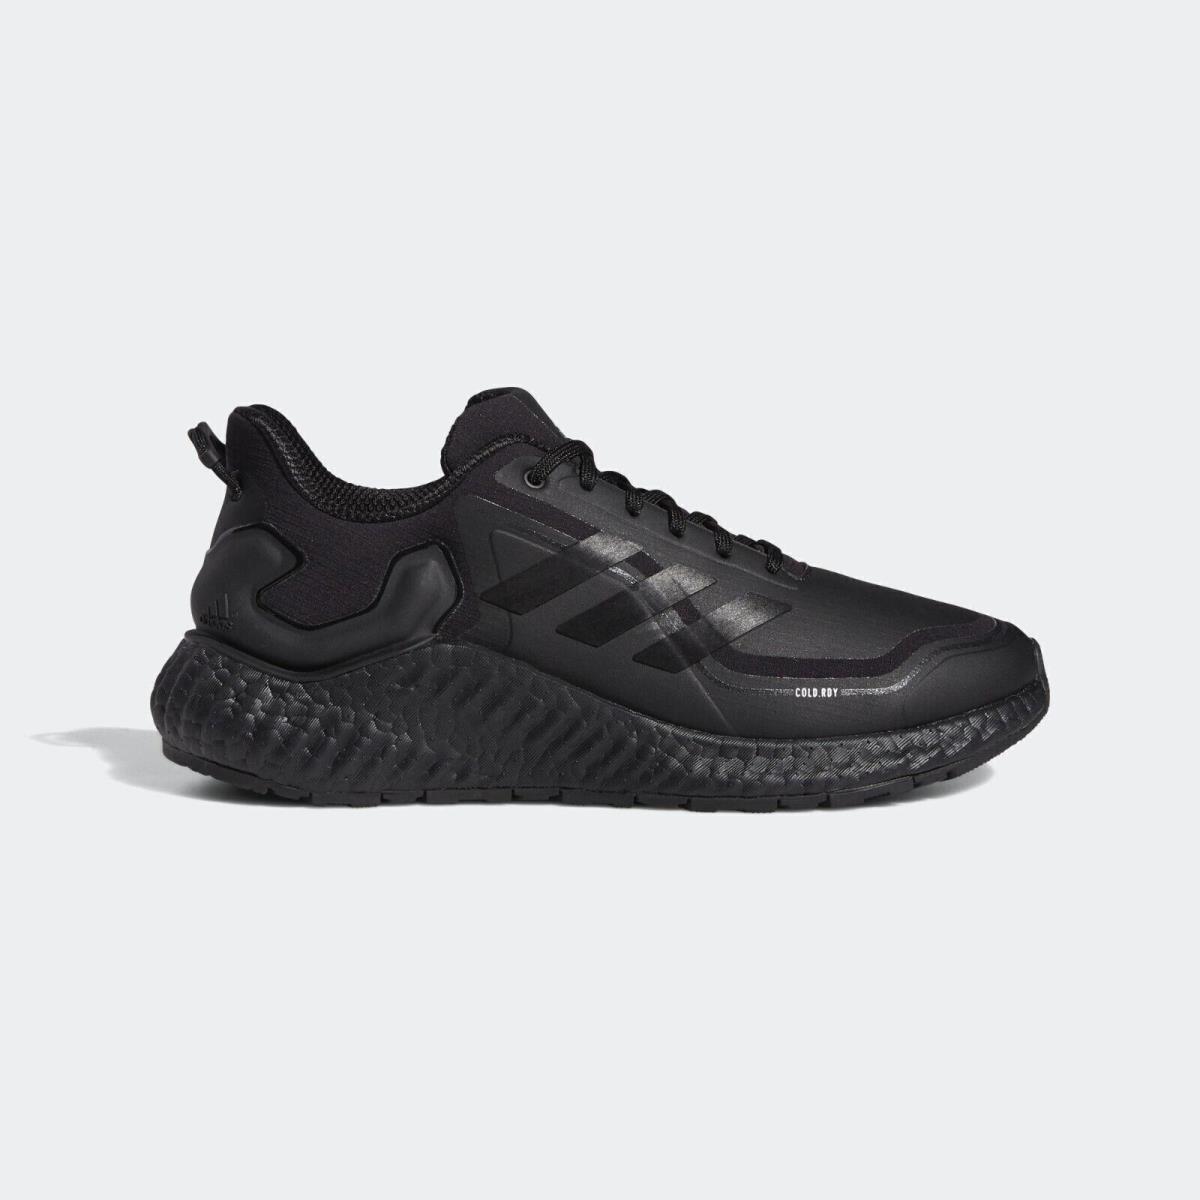 Adidas Climawarm Ltd EG5574 Mens Core Black Athletic Running Sneaker Shoes DC309